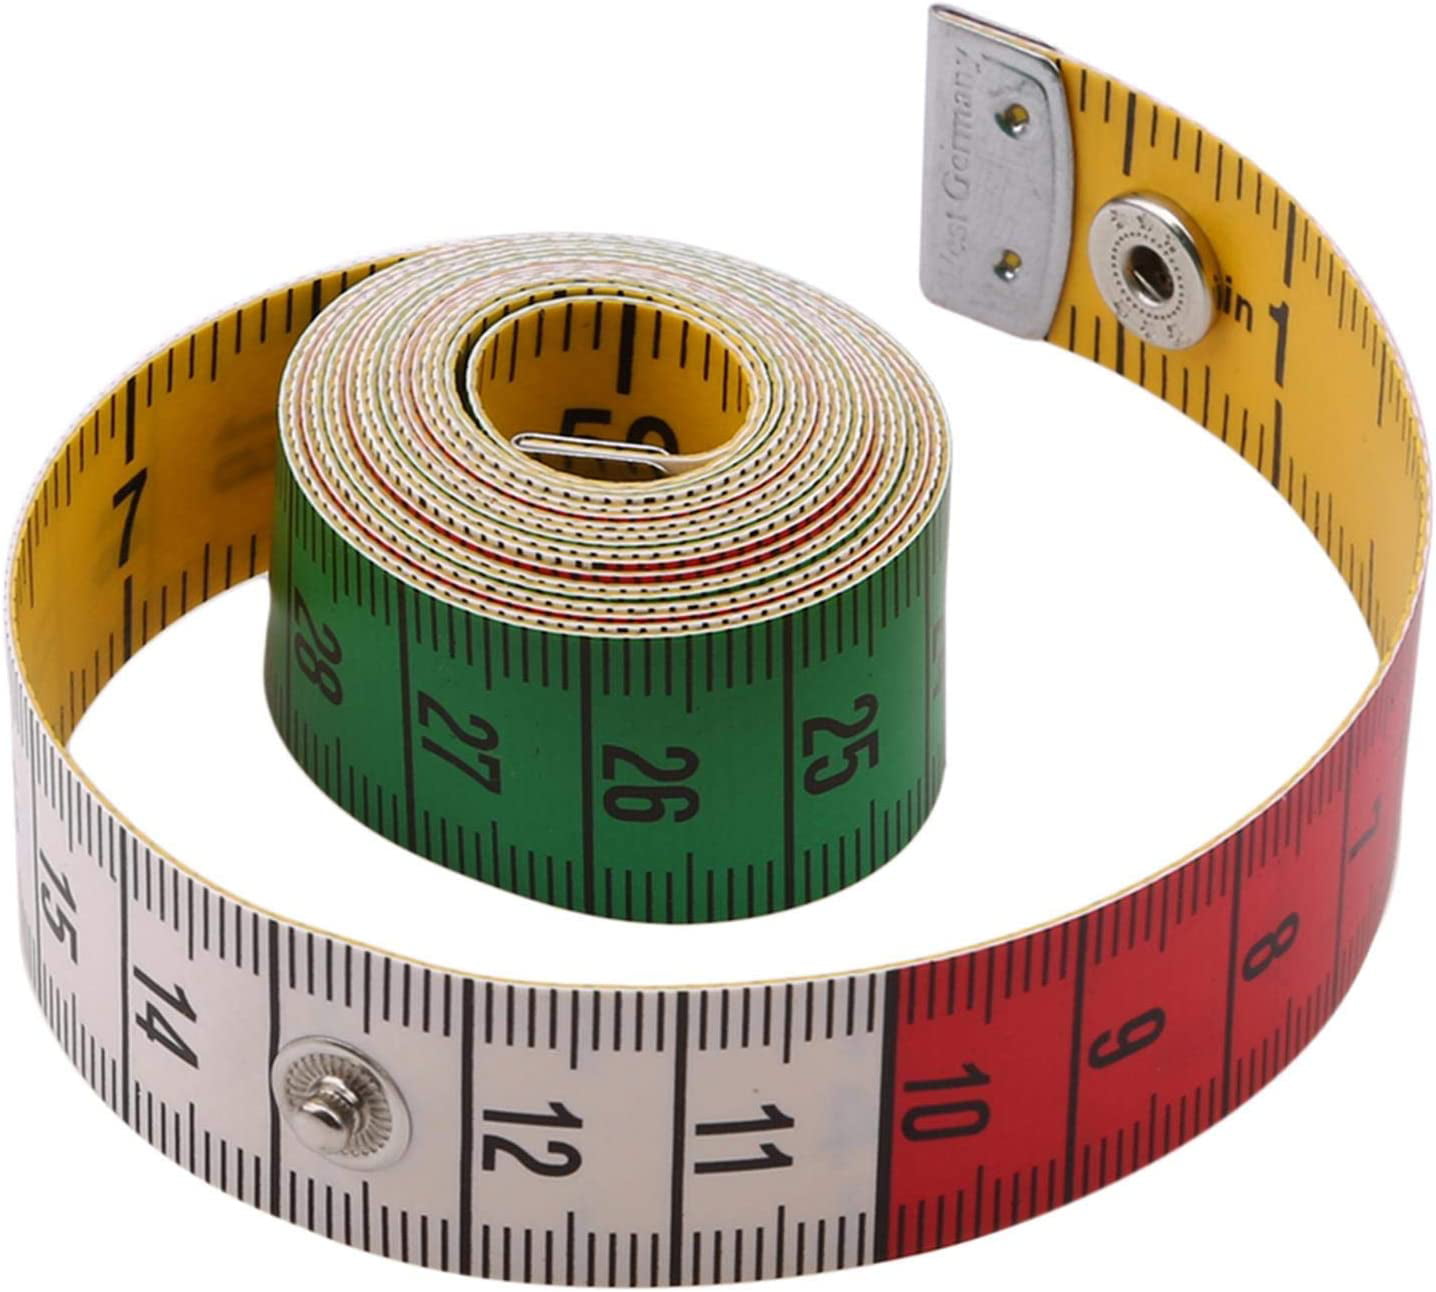 60” Flexible Tape Measure